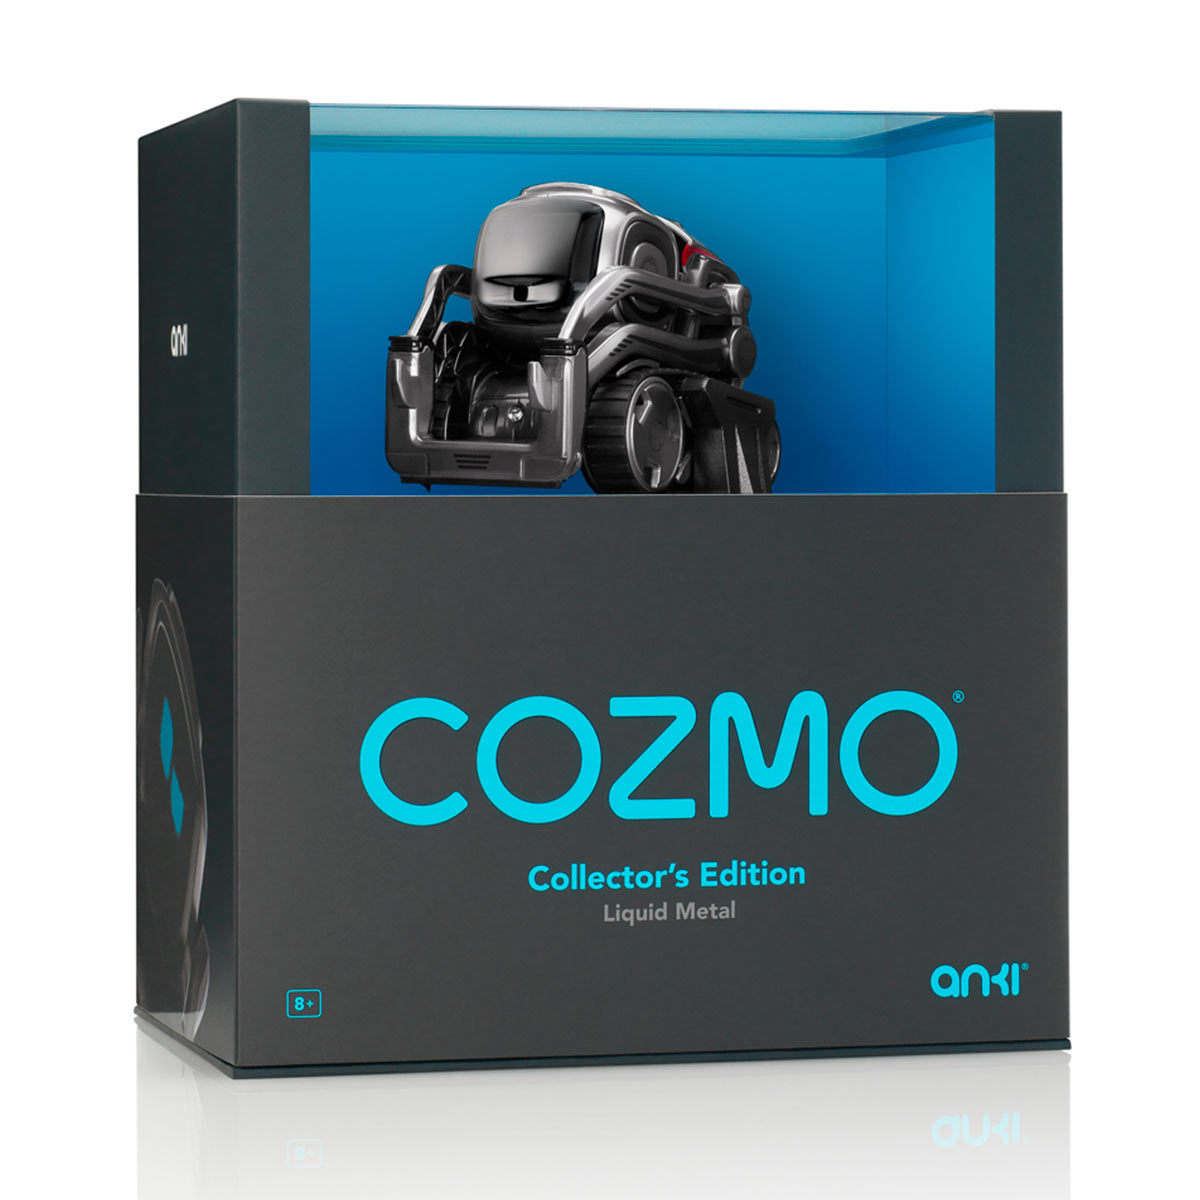 Anki Cozmo Collectors Edition Robot in Black/Grey (8+ Years)